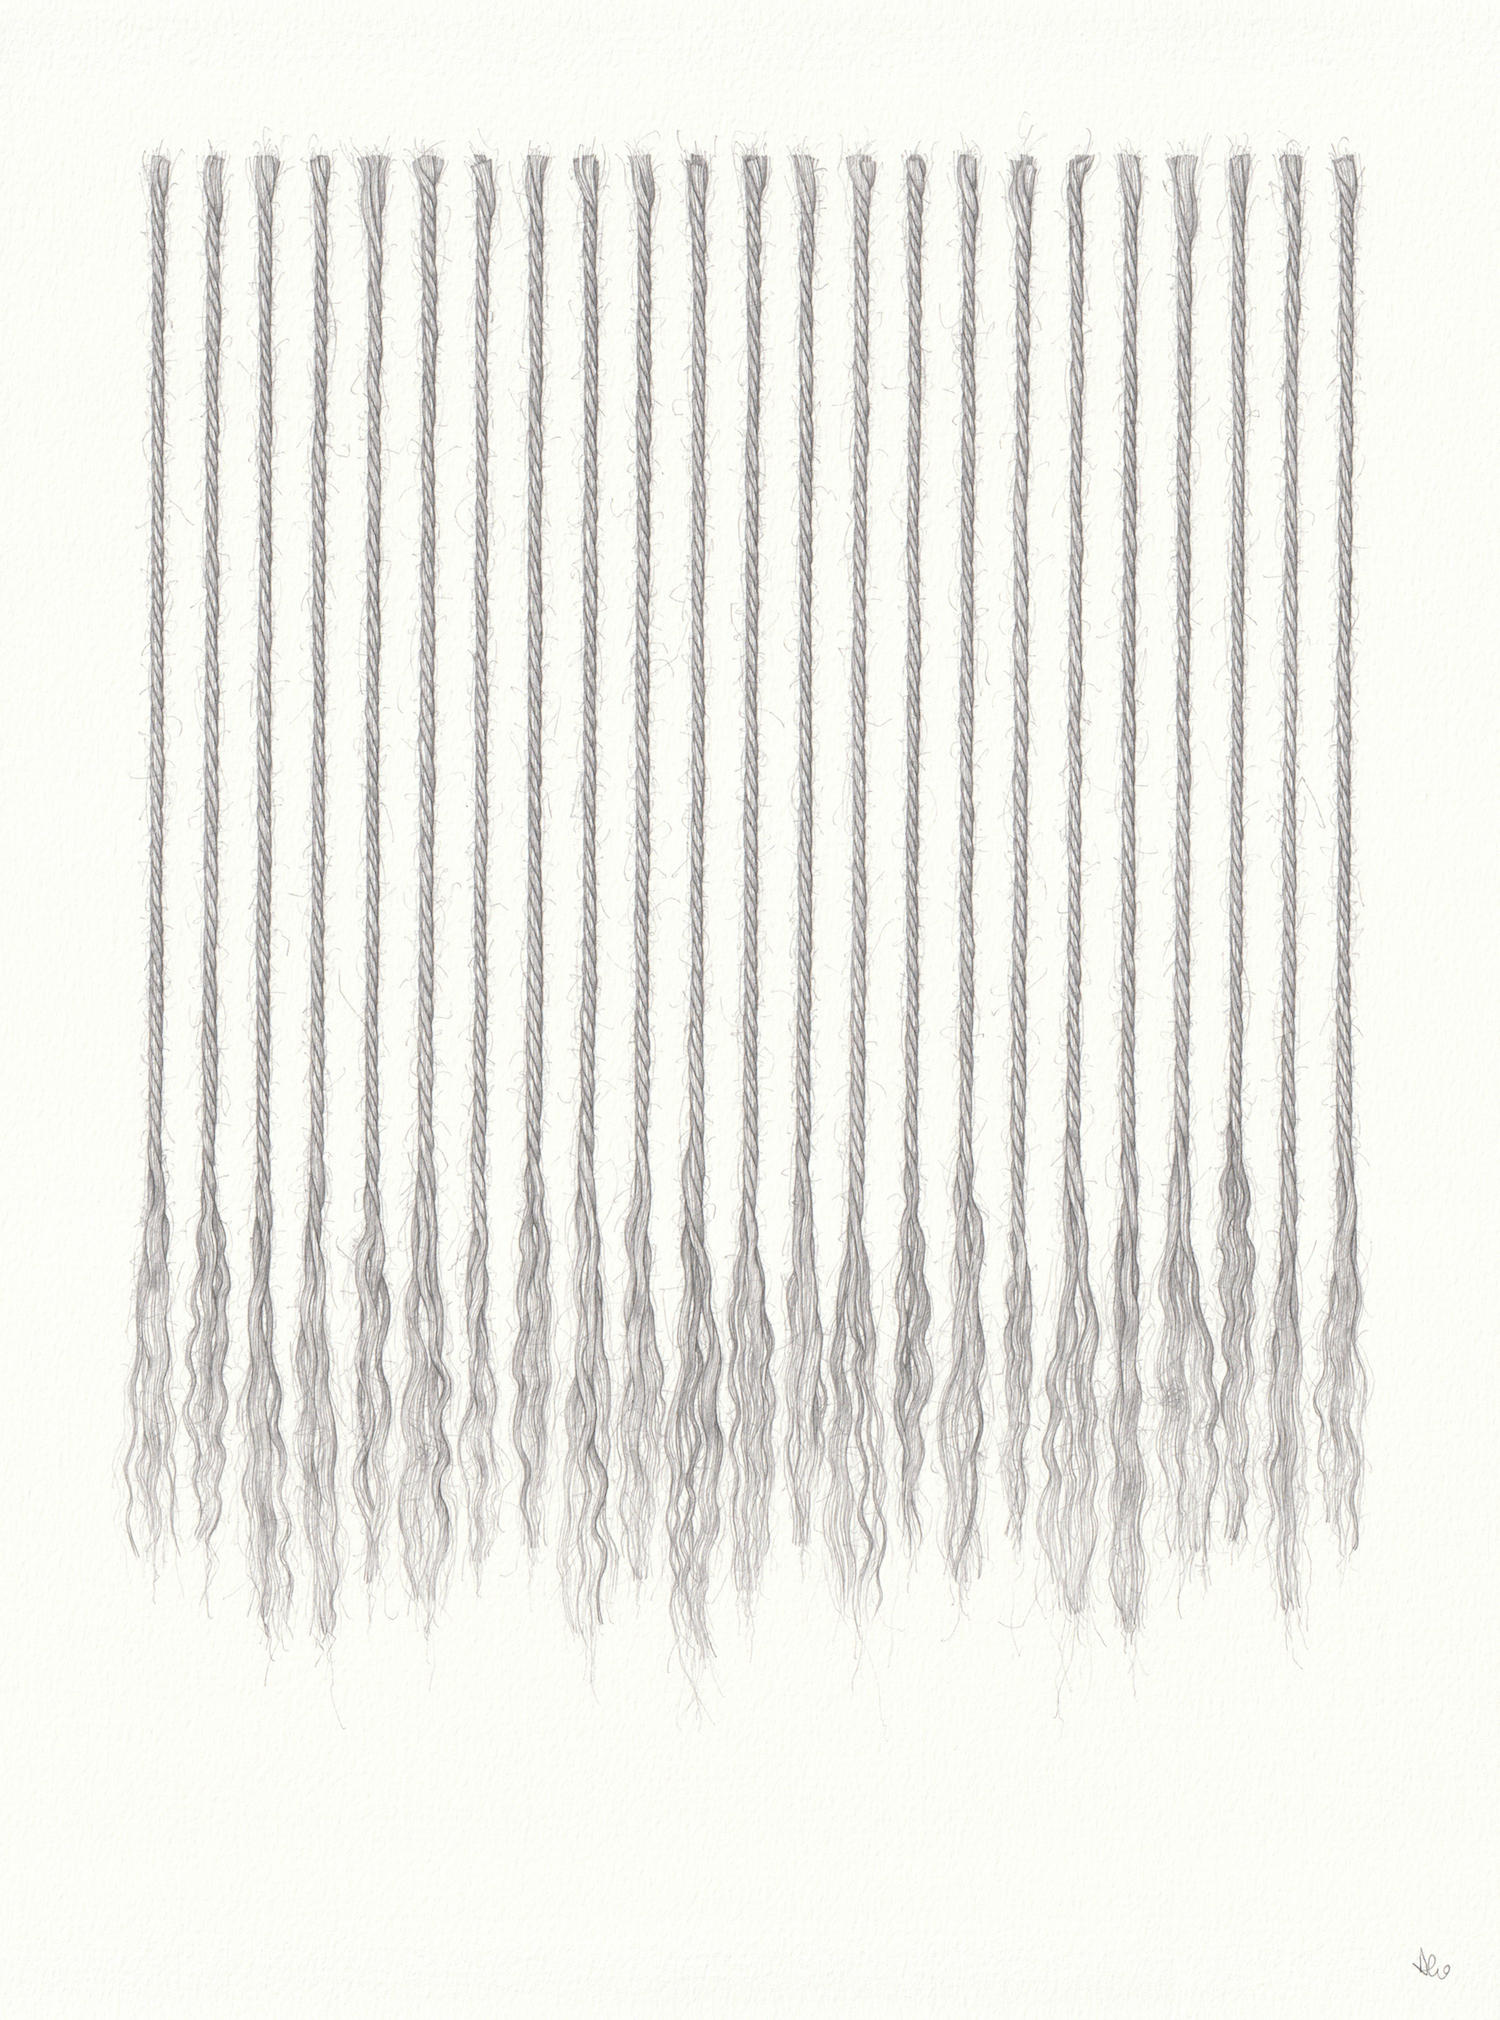 Tasselled 2 (38 x 28 cm) pencil on paper